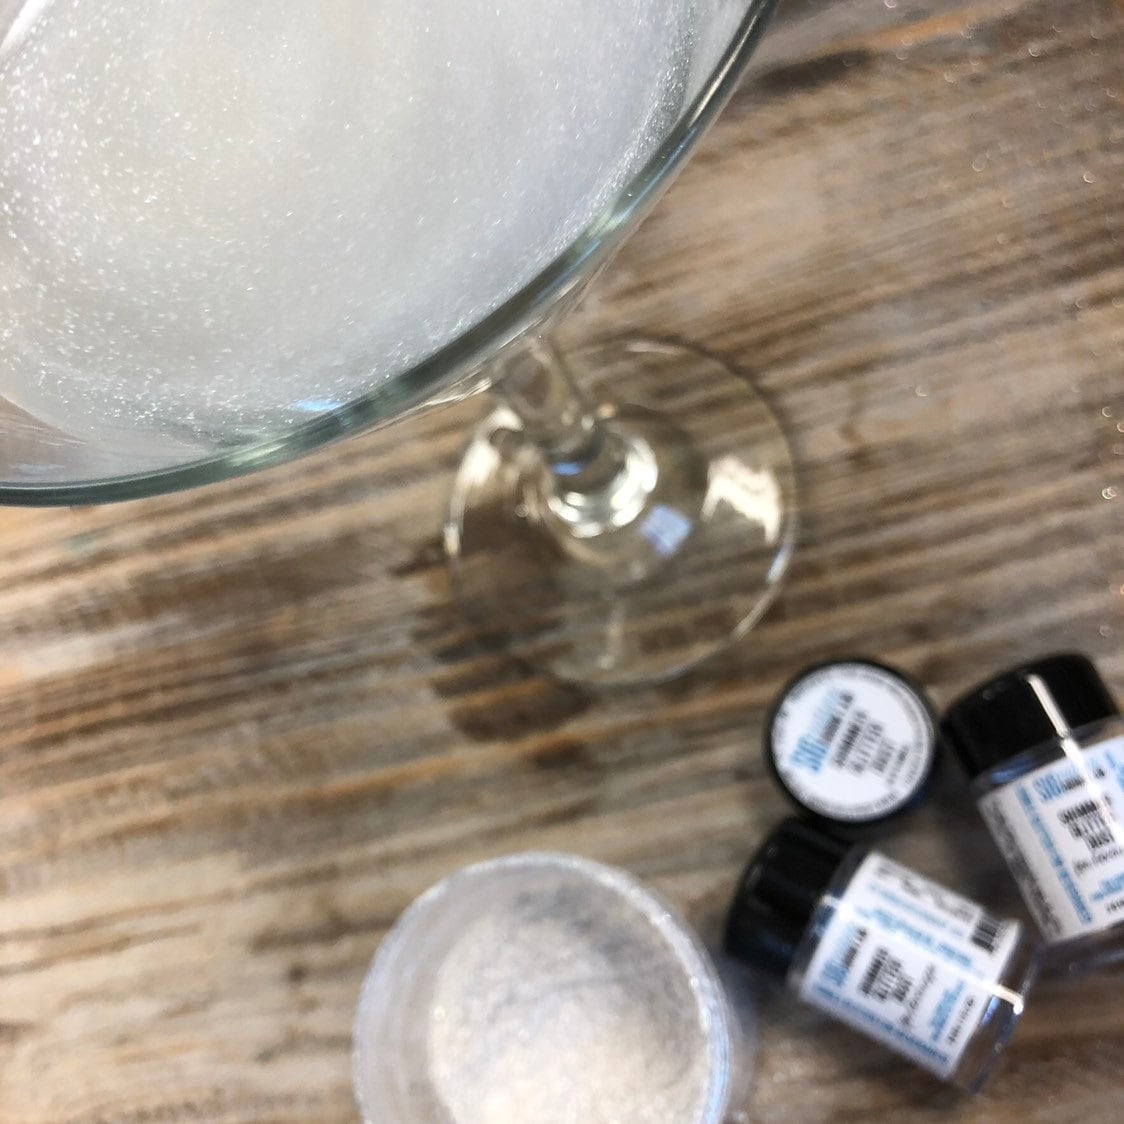 Blue Shimmer Glitter Dust™ Edible Glitter For Drinks, Cocktails, Beer,  Garnish Glitter & Beverages - Food-Grade FDA Compliant by Never Forgotten  Designs